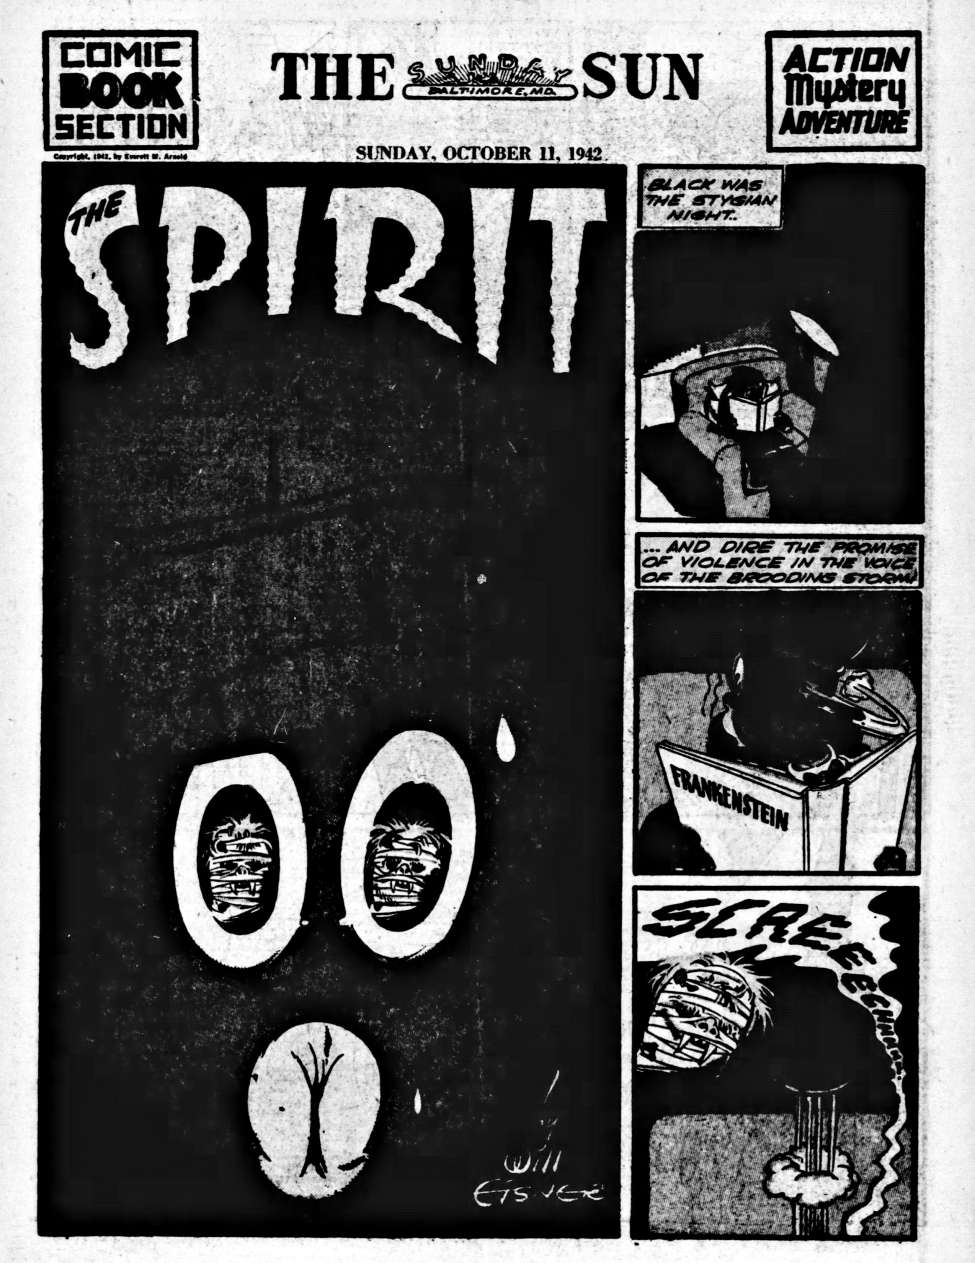 Comic Book Cover For The Spirit (1942-10-11) - Baltimore Sun (b/w)